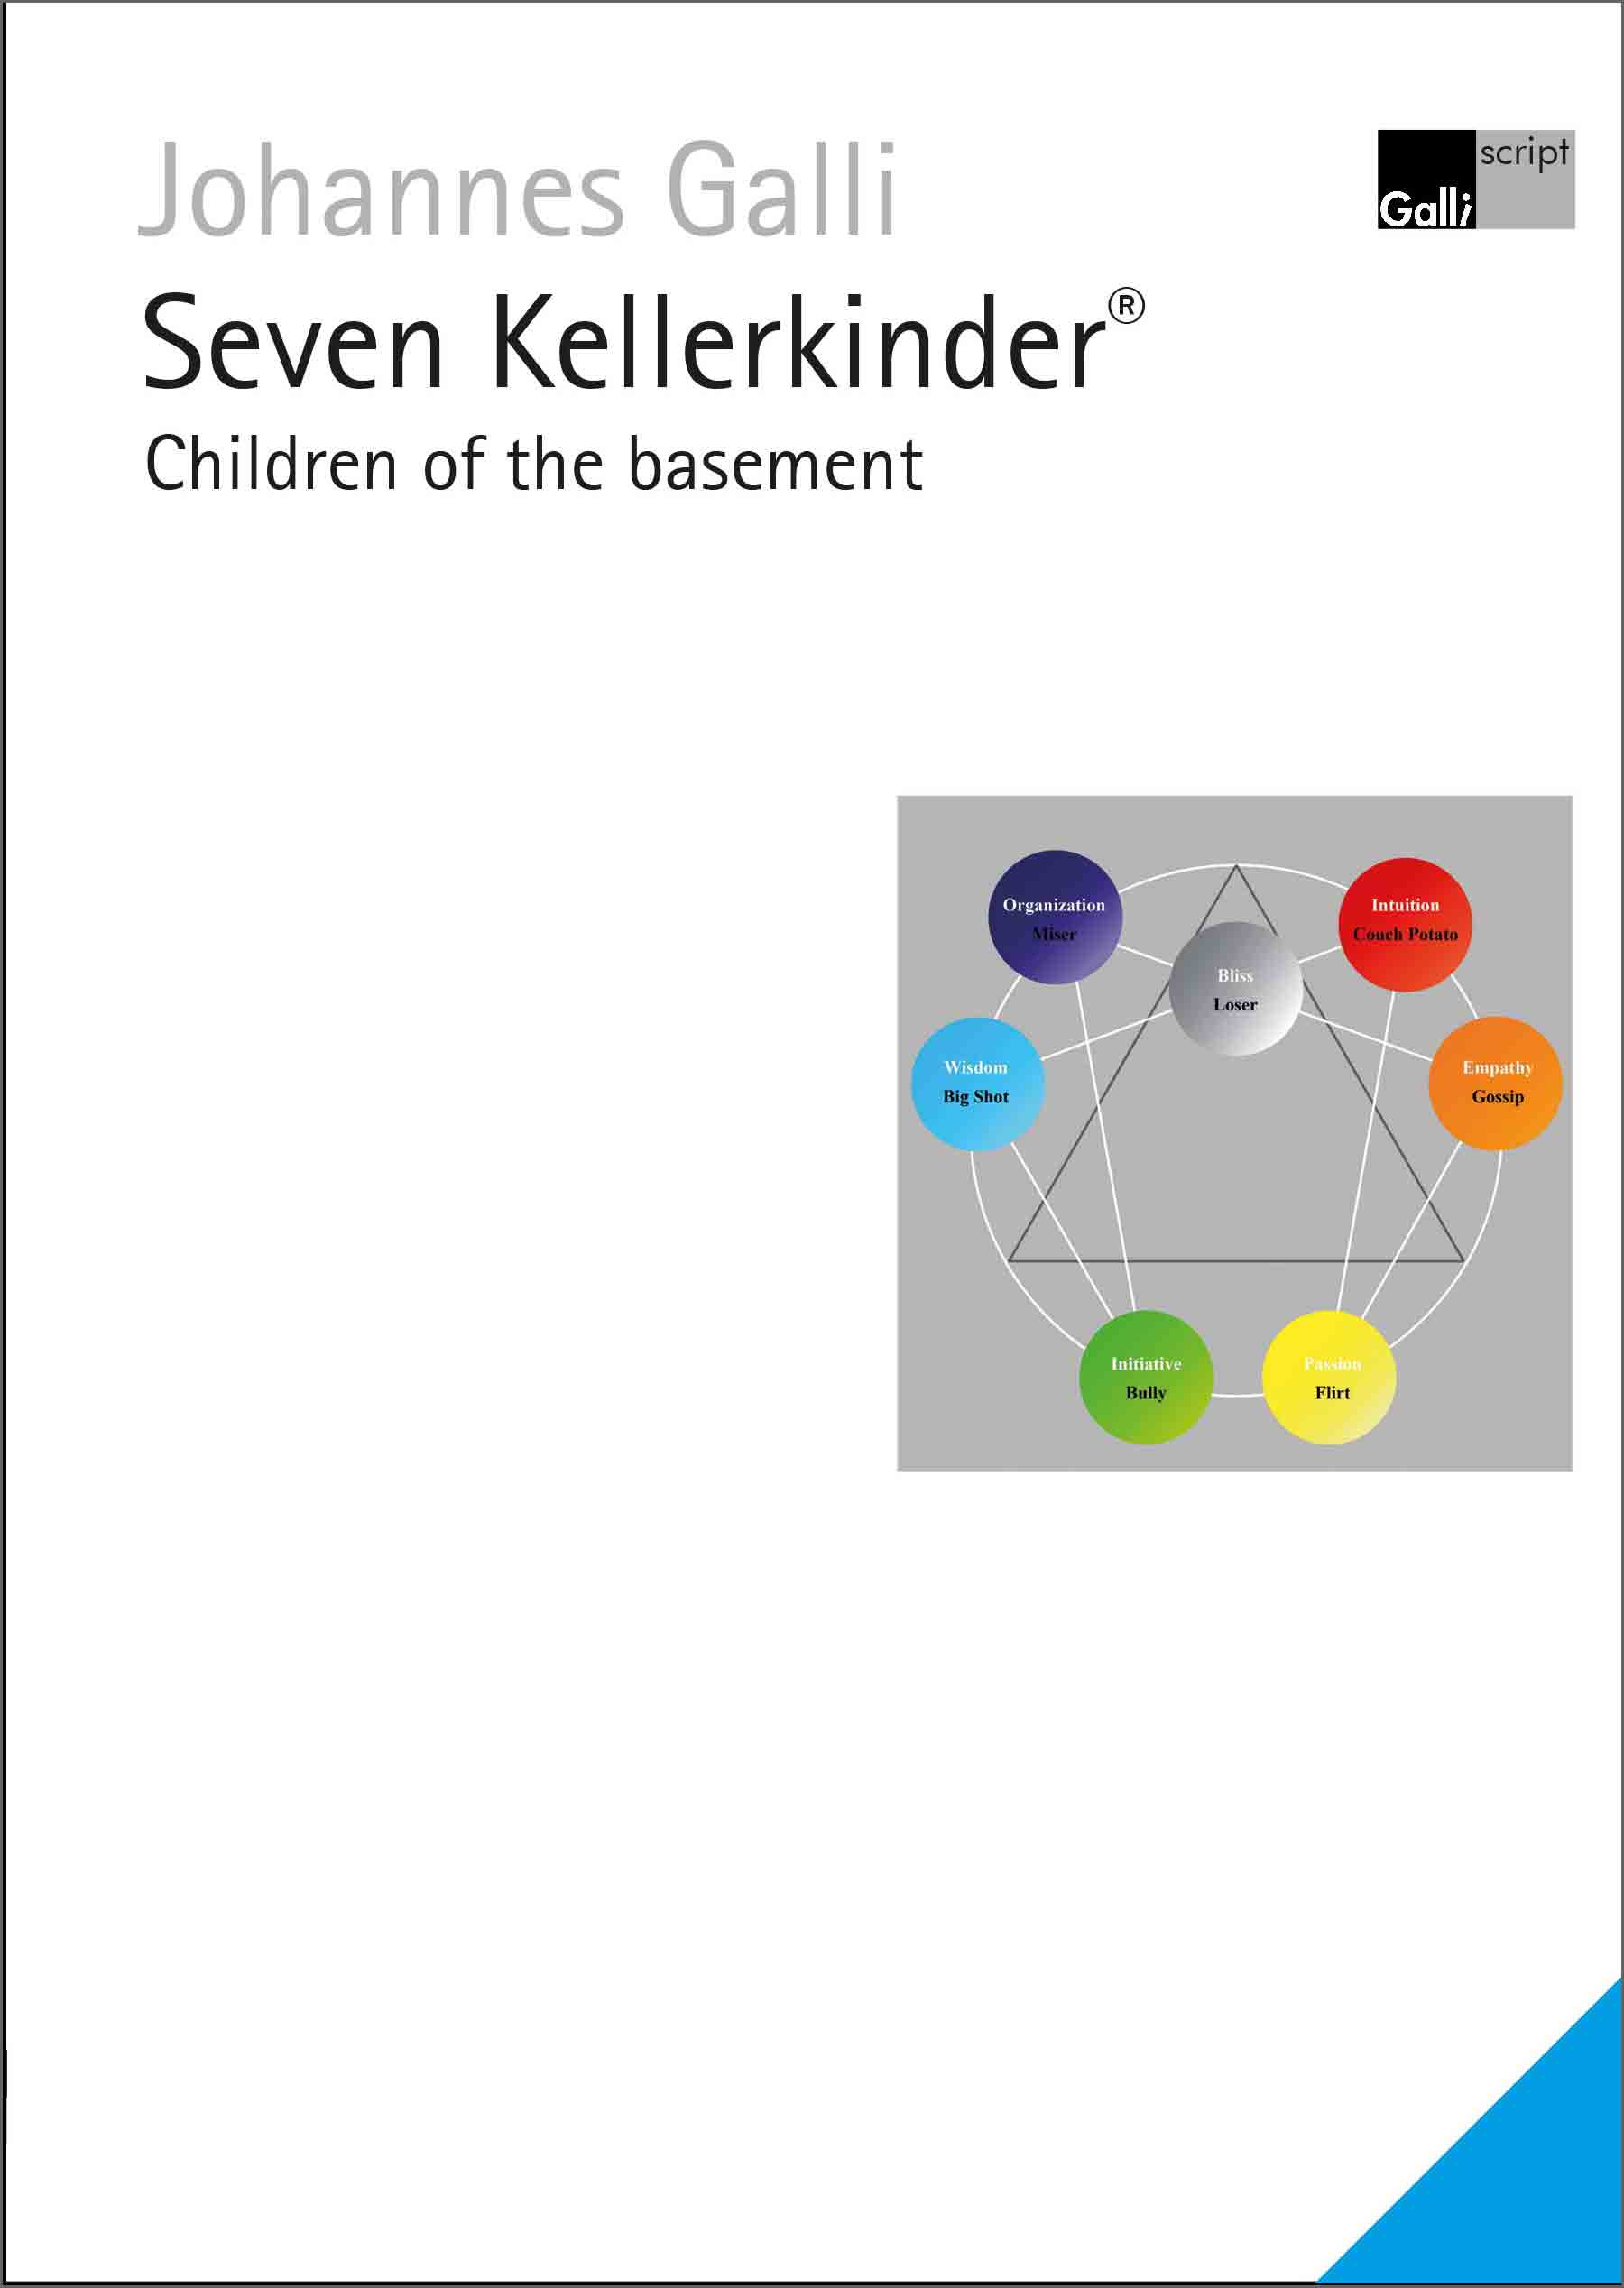 The Seven Kellerkinder®